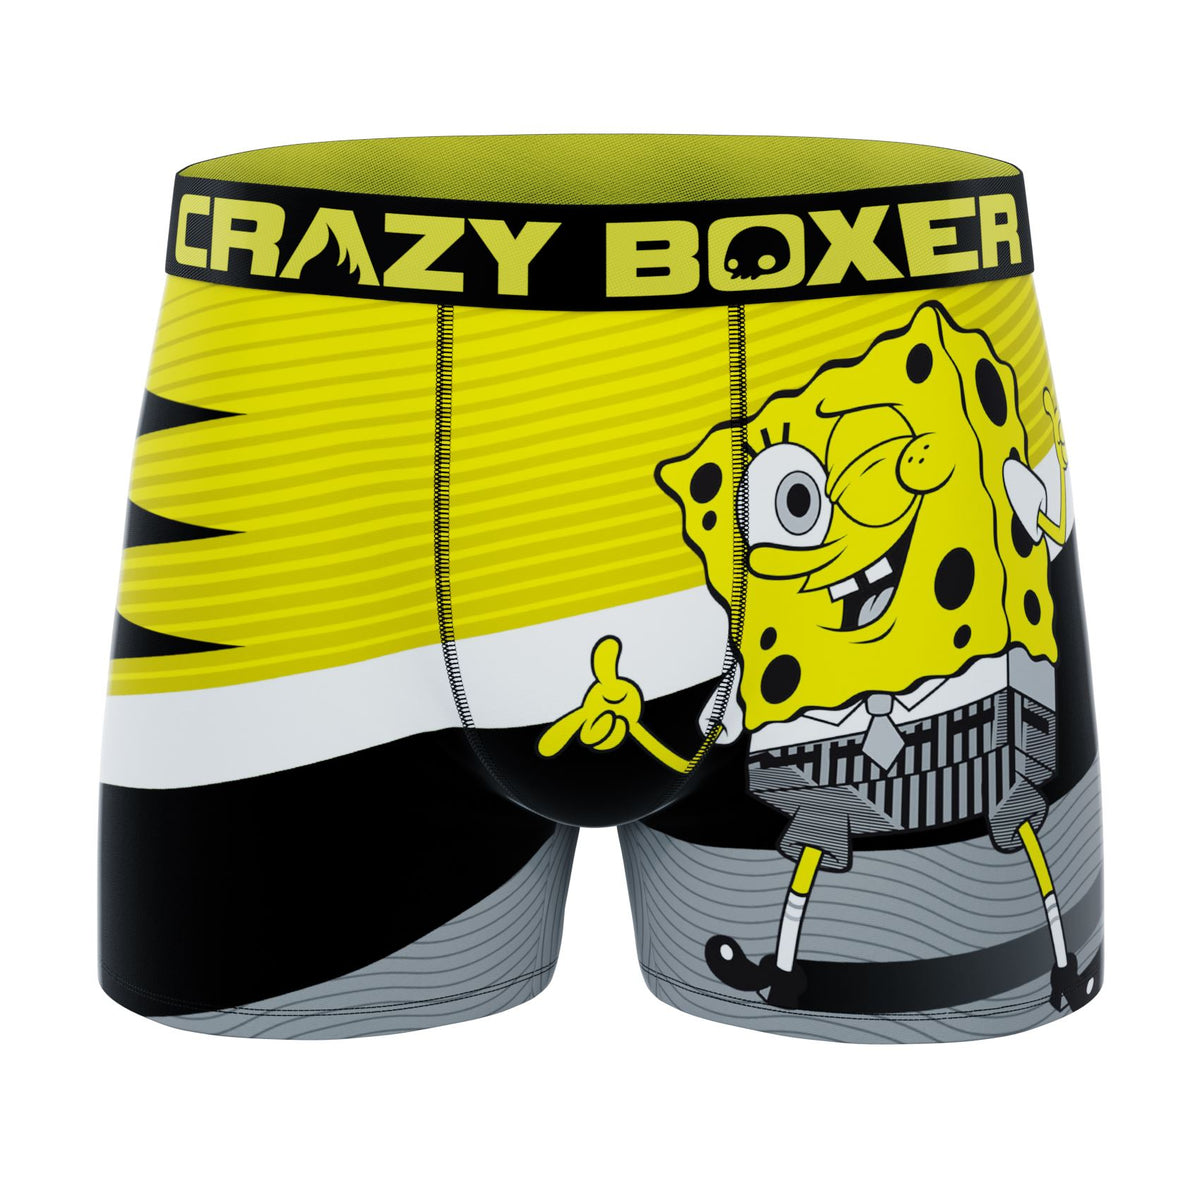 Crazy Boxer SpongeBob Burgers and Fries, Men's Boxer Briefs, Novelty Gift  Box